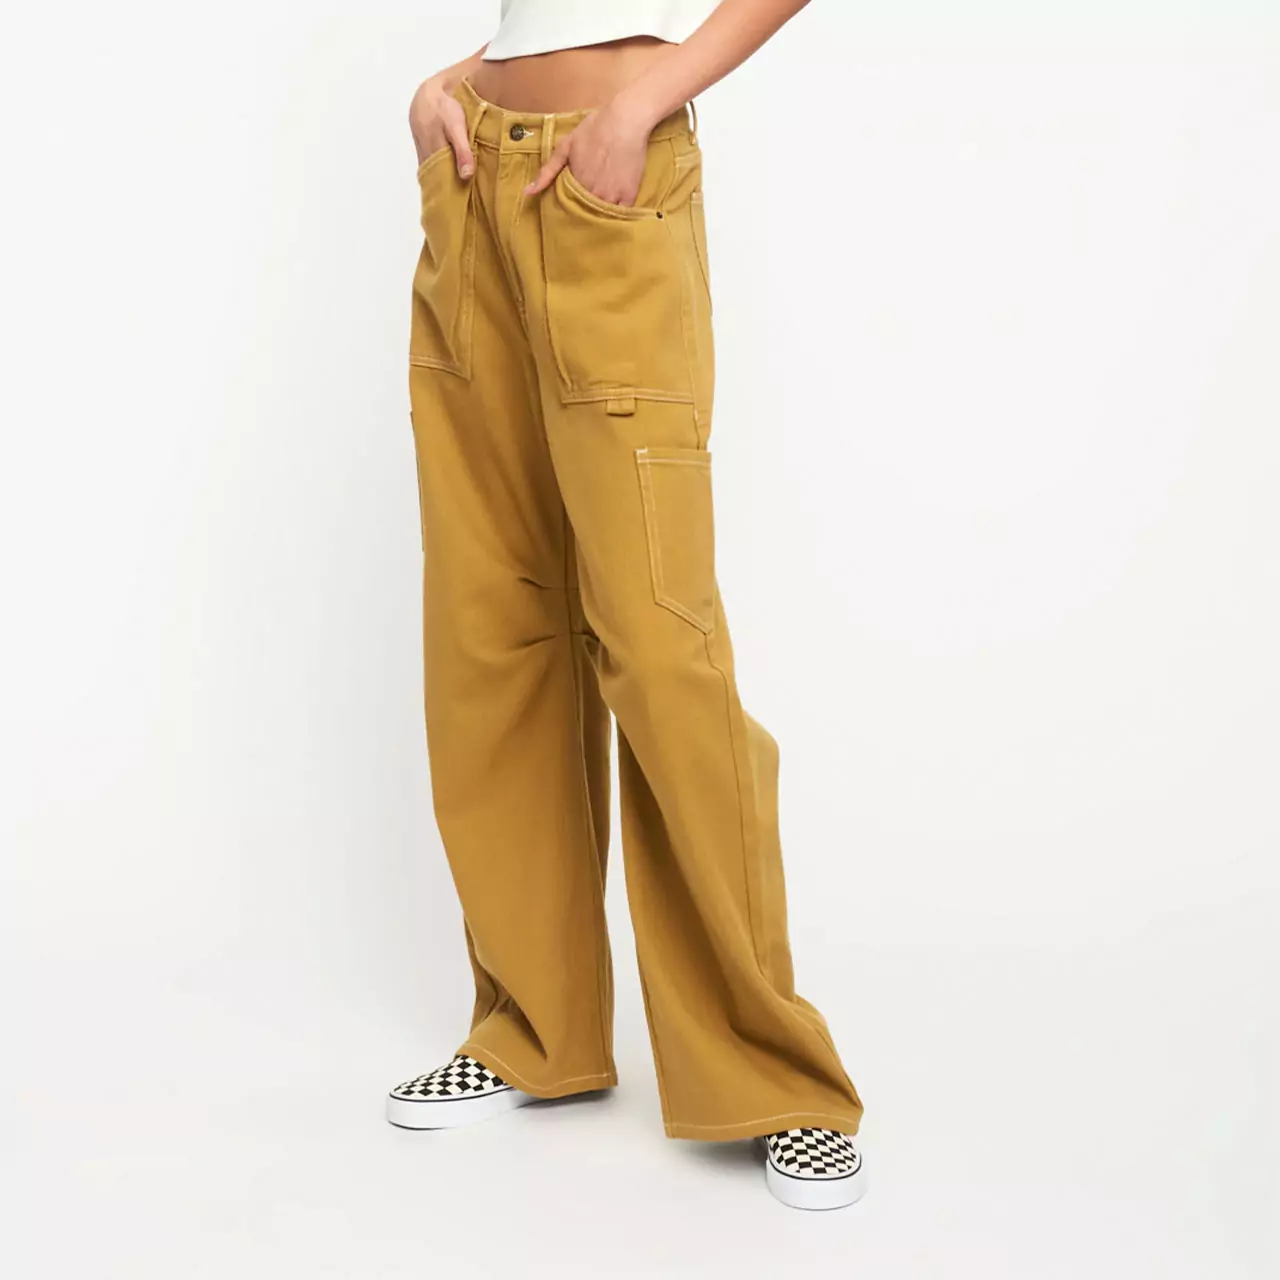 Žluté kalhoty Miami Vice | To si VEMZU. To musím mít!